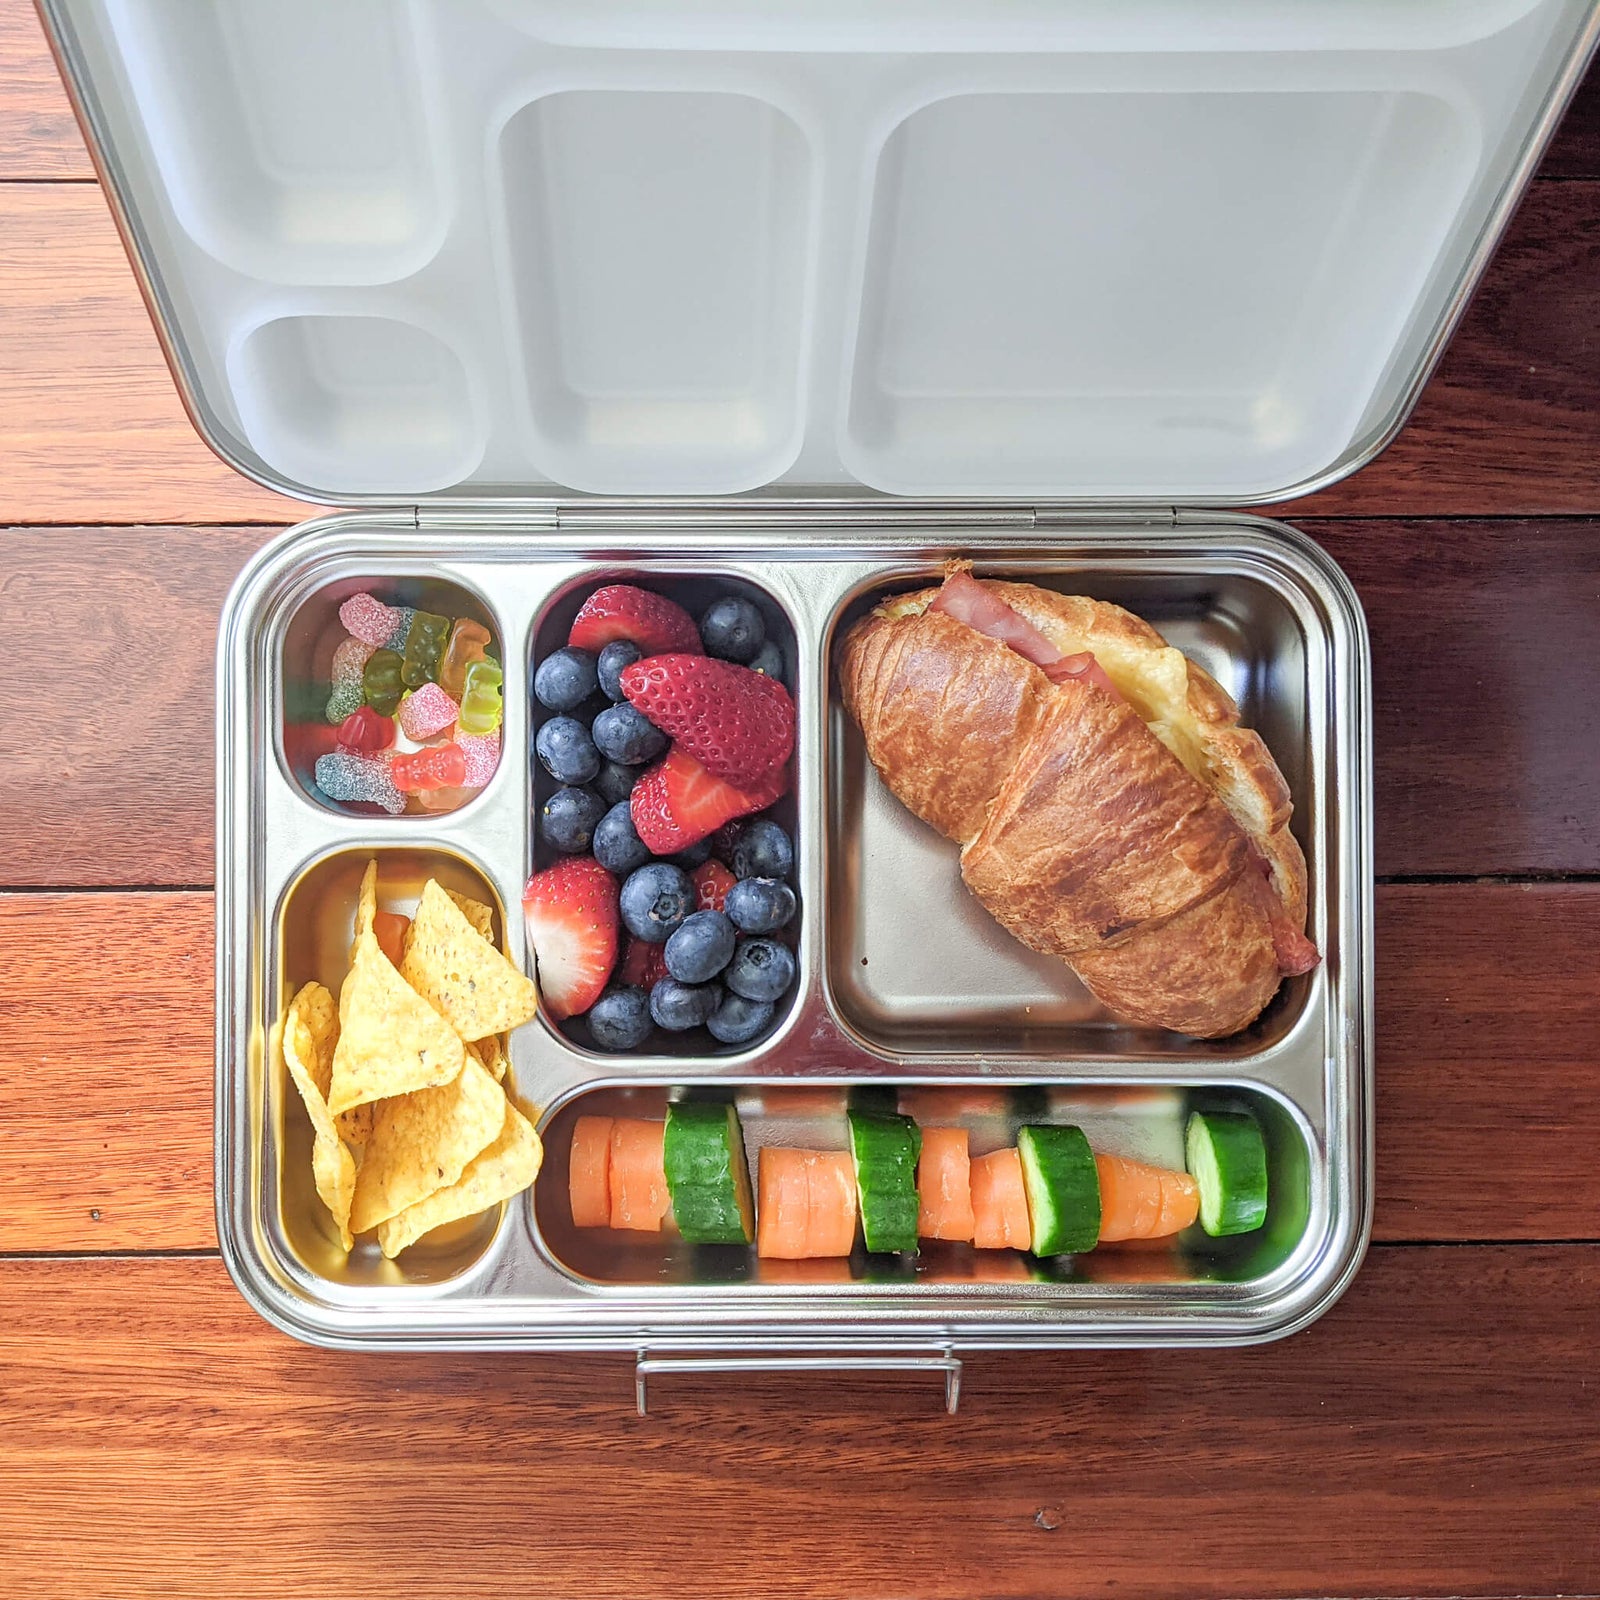 School Lunch Box Ideas - Ecococoon ™